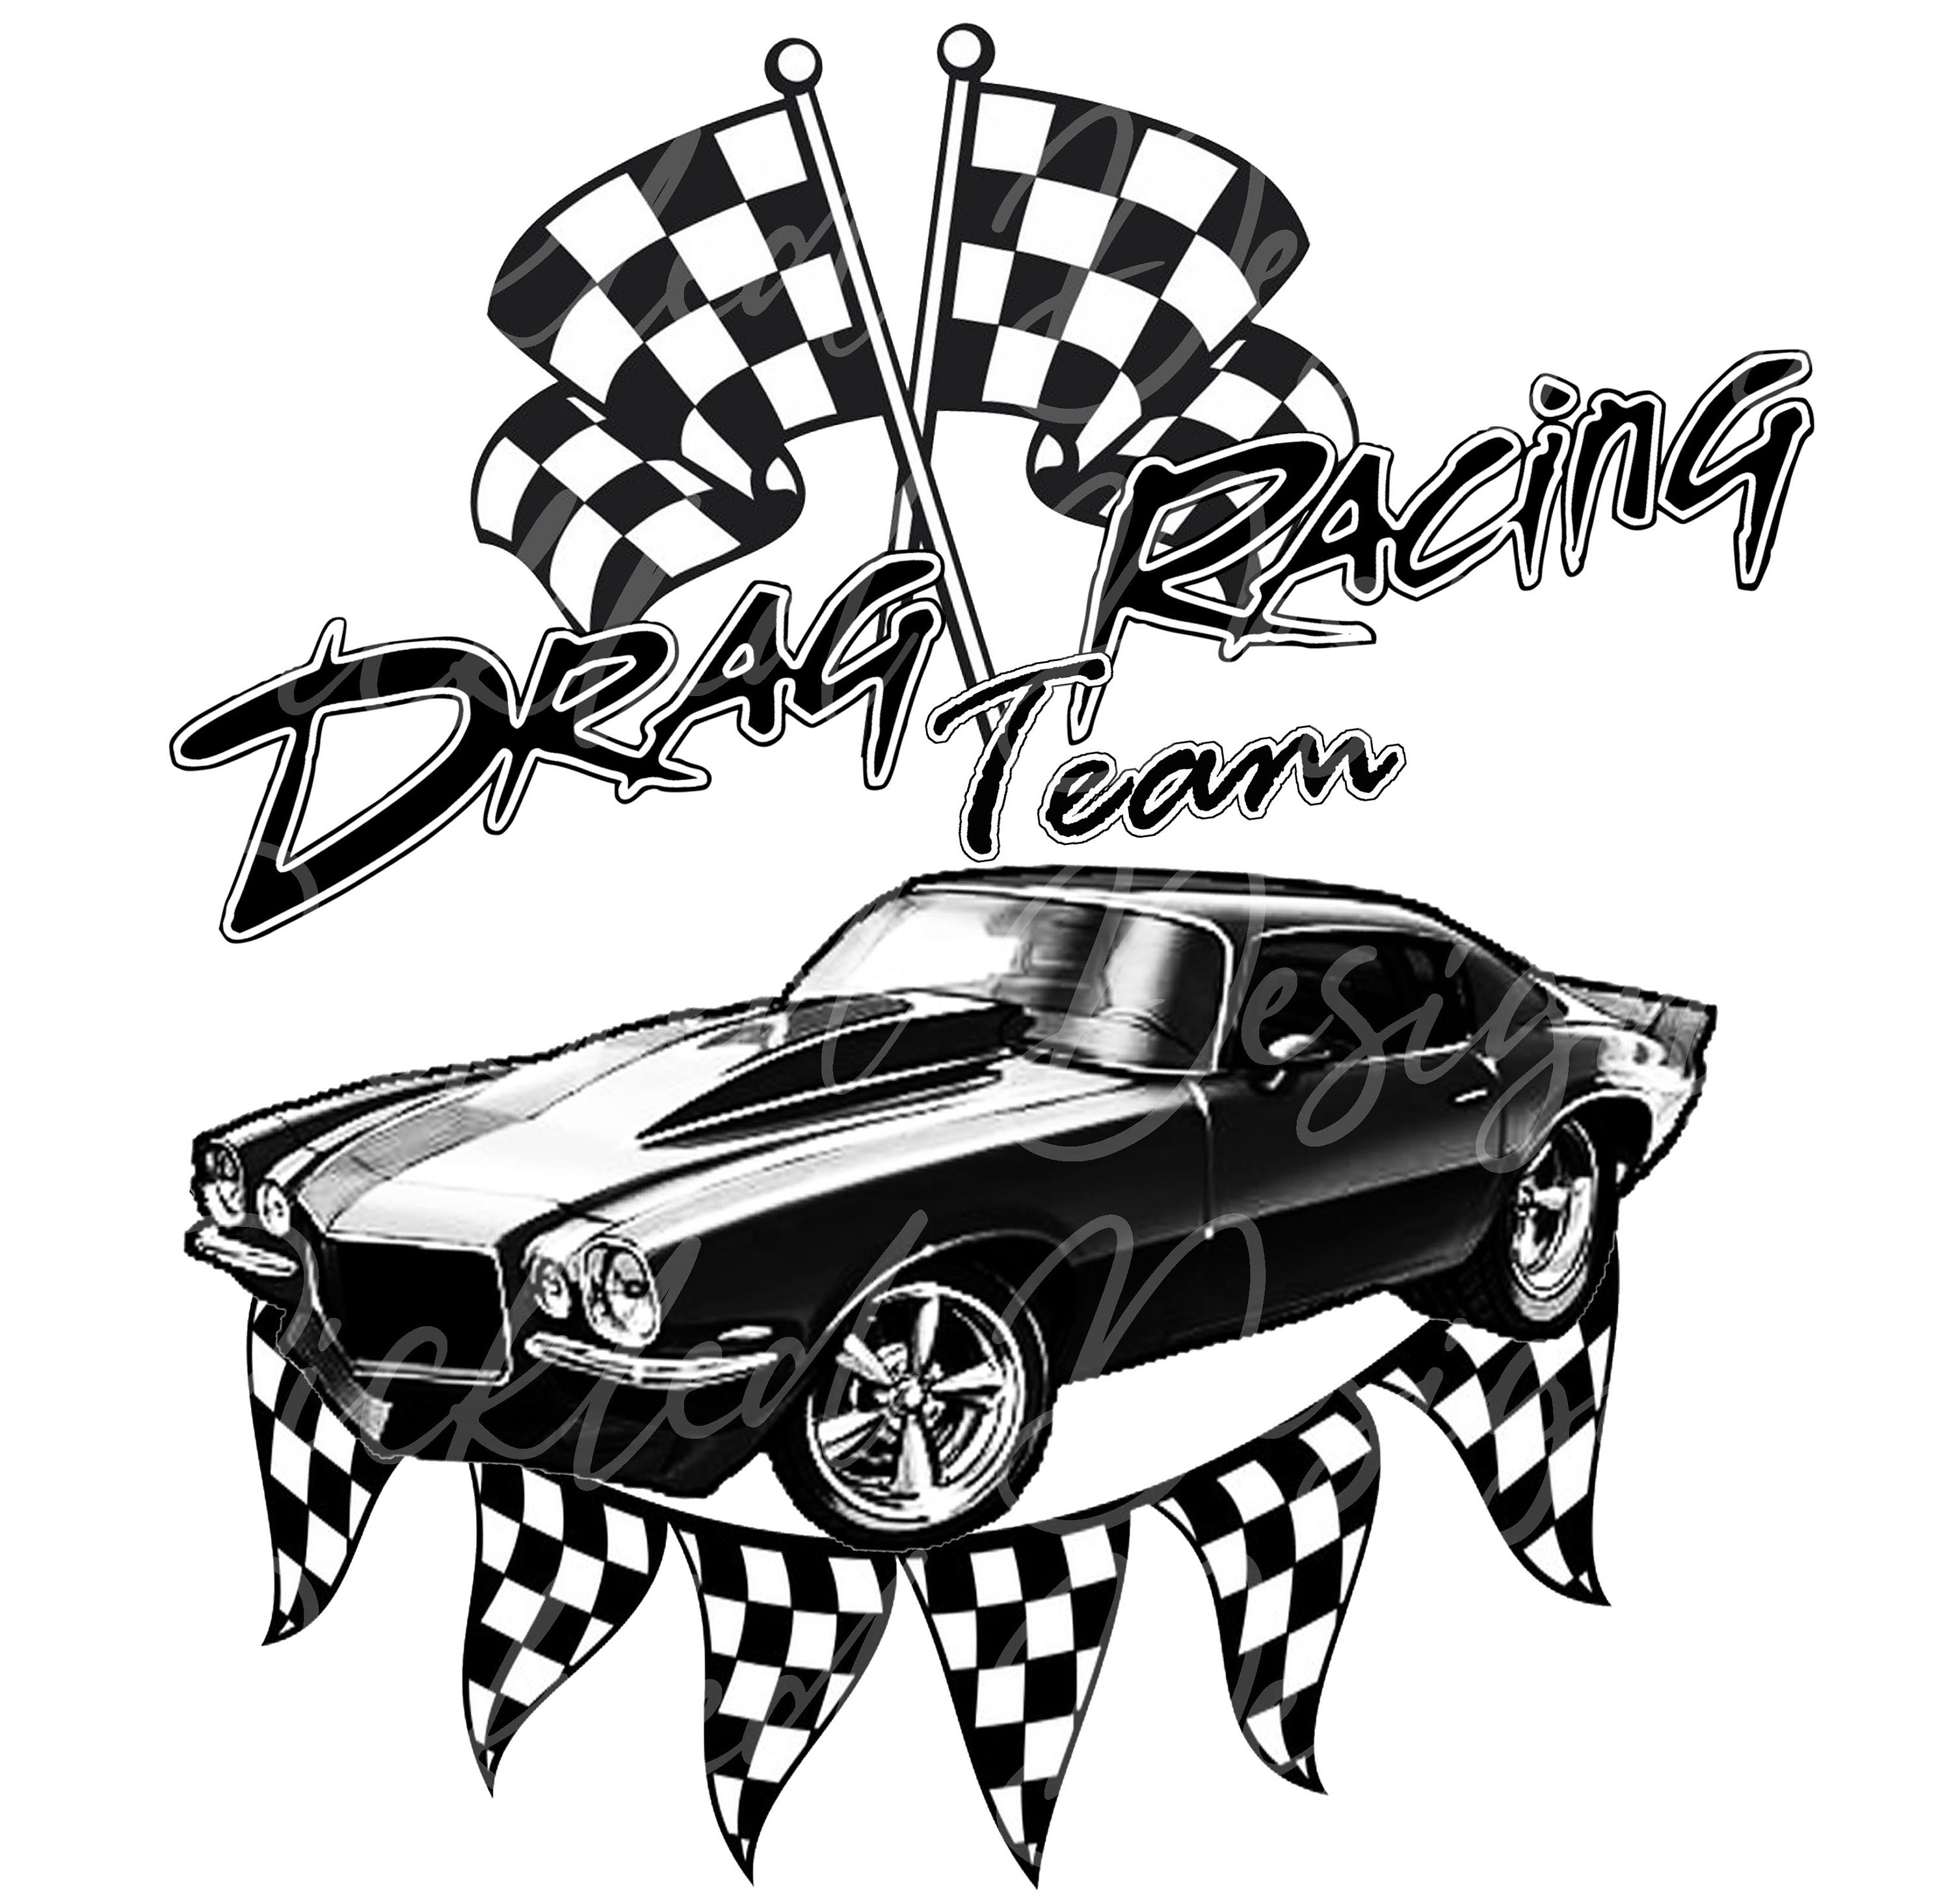 Download 72 Camaro DRAG RACING Design for Decals Race Car | Etsy